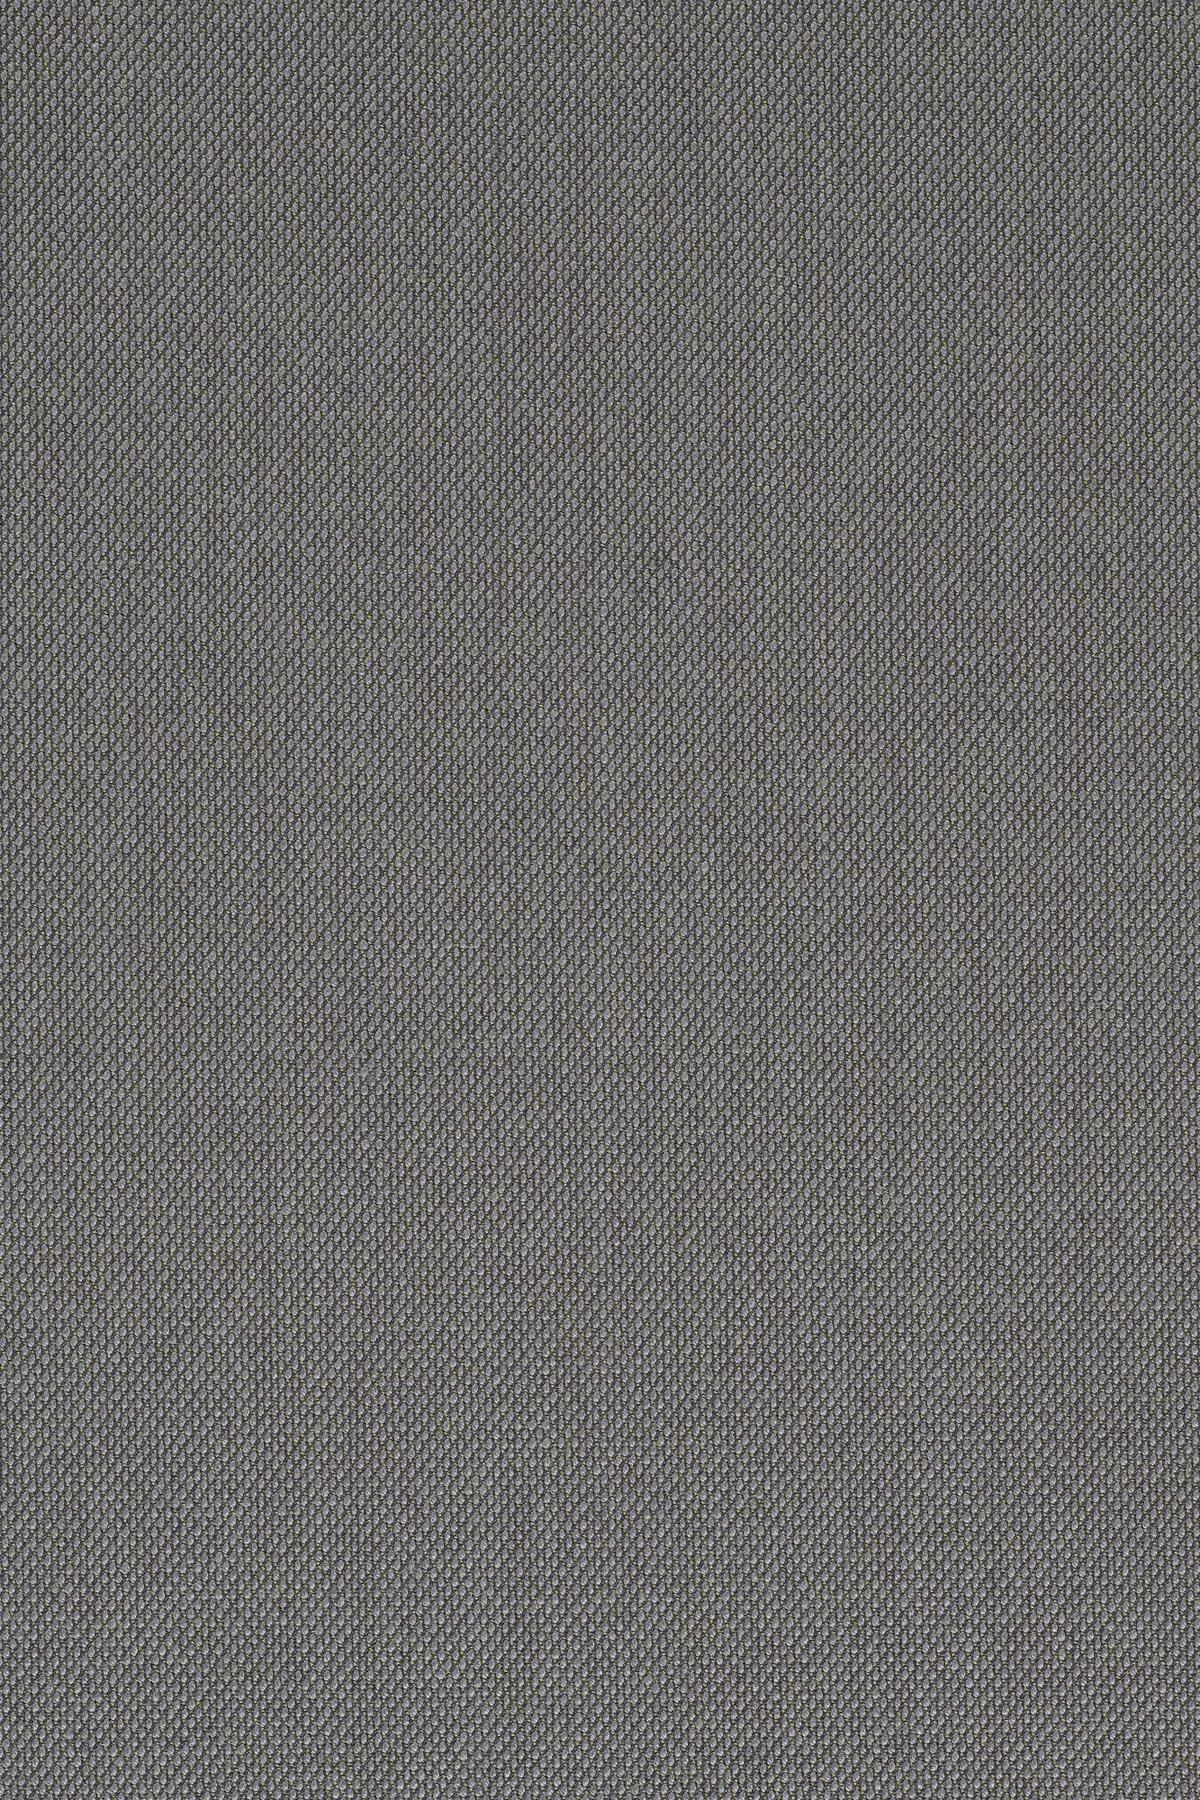 Fabric sample Steelcut Trio 3 176 grey